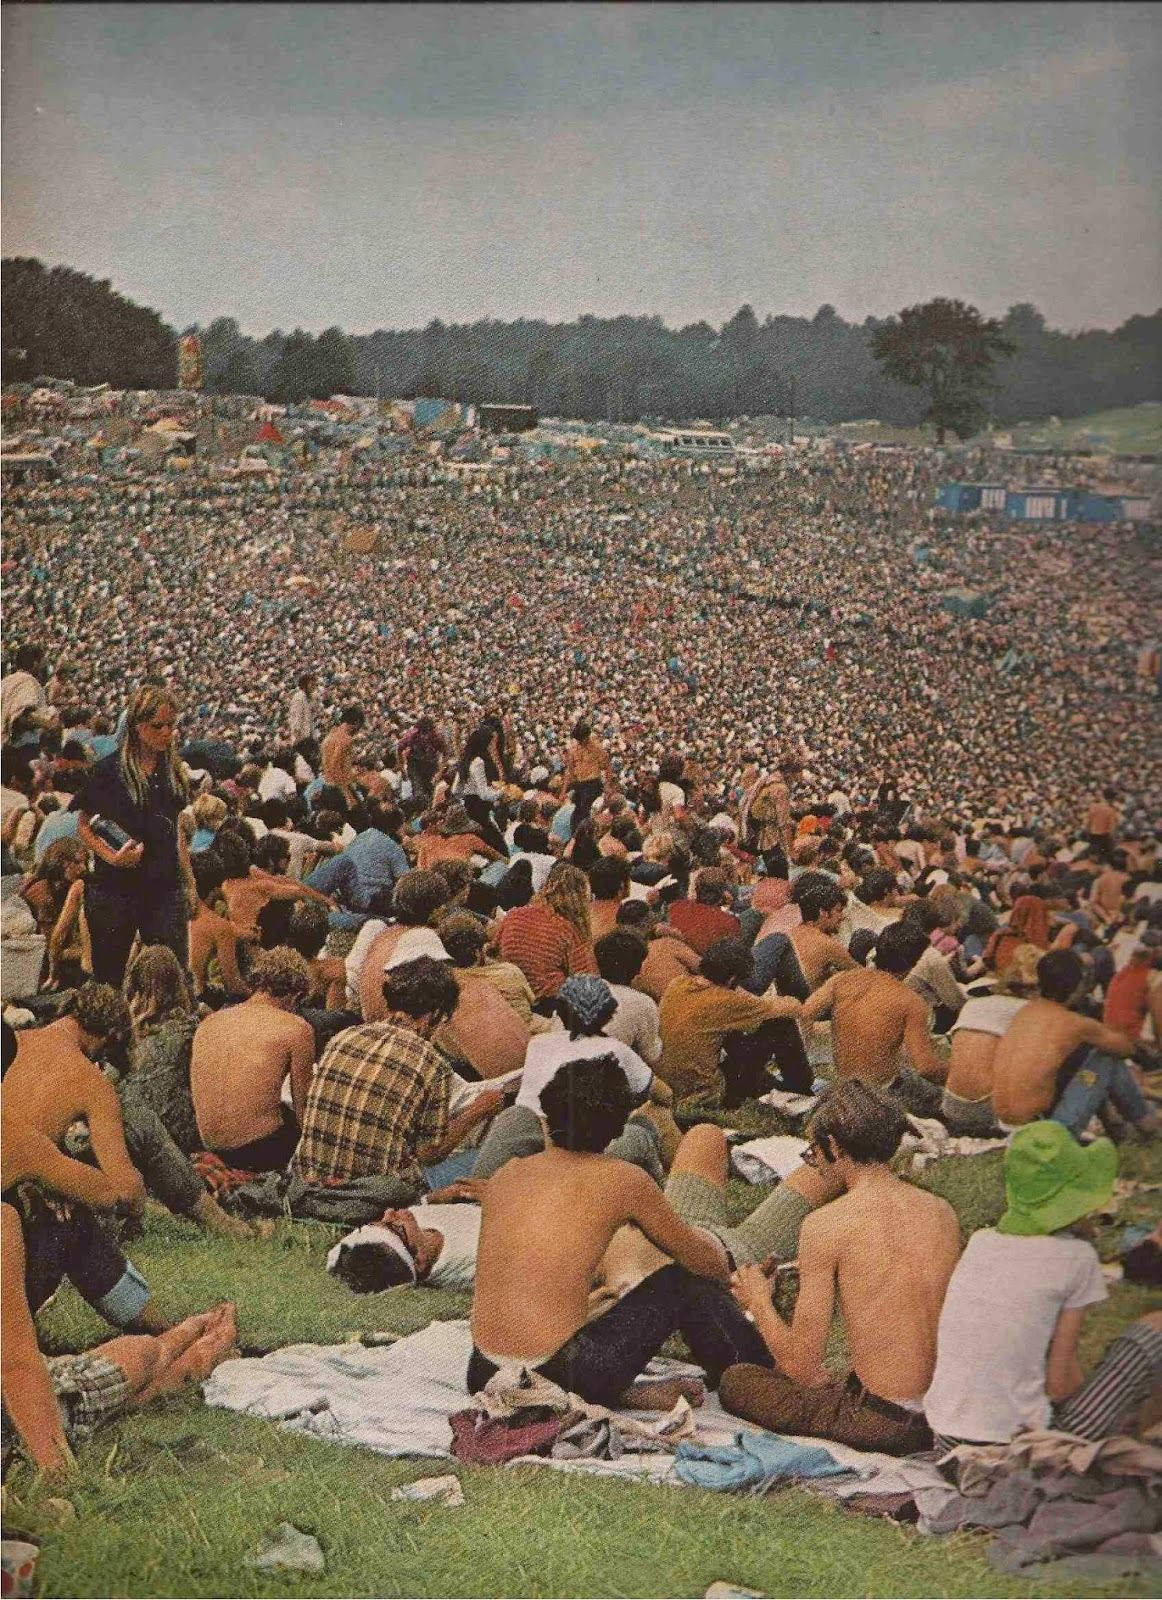 Woodstock 1969 Crowd Background